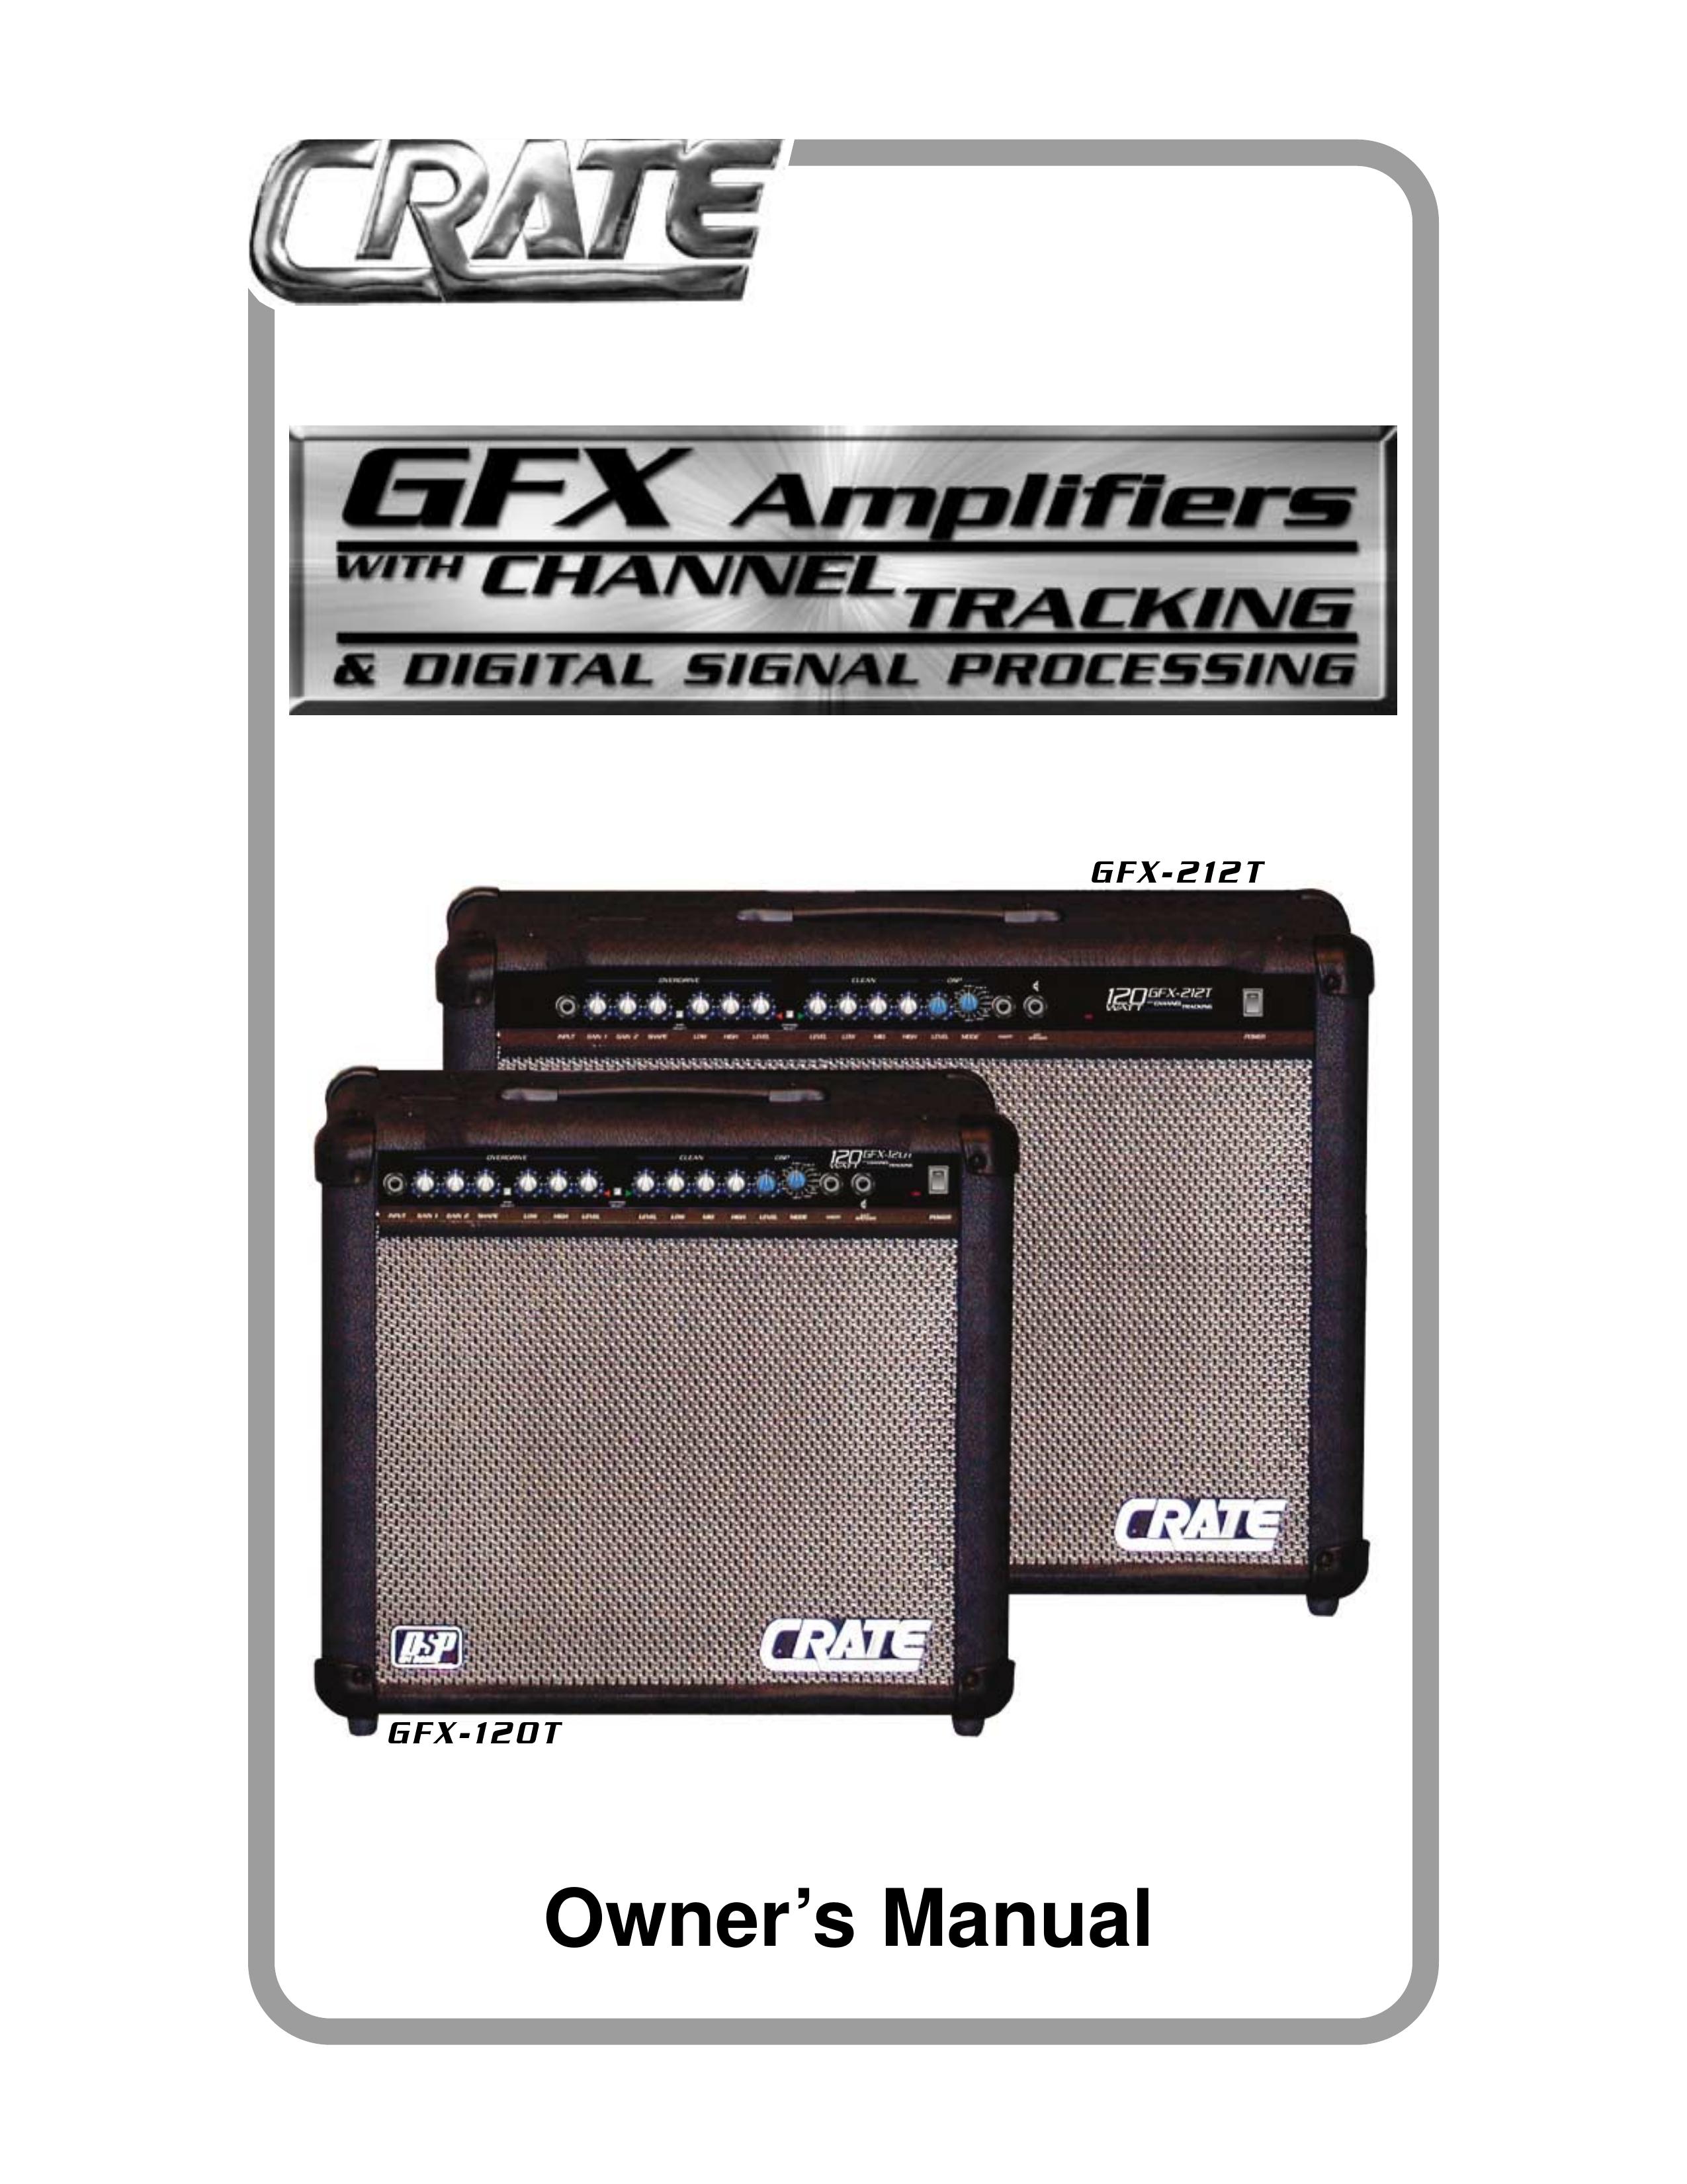 Crate Amplifiers GFX-120T Musical Instrument Amplifier User Manual